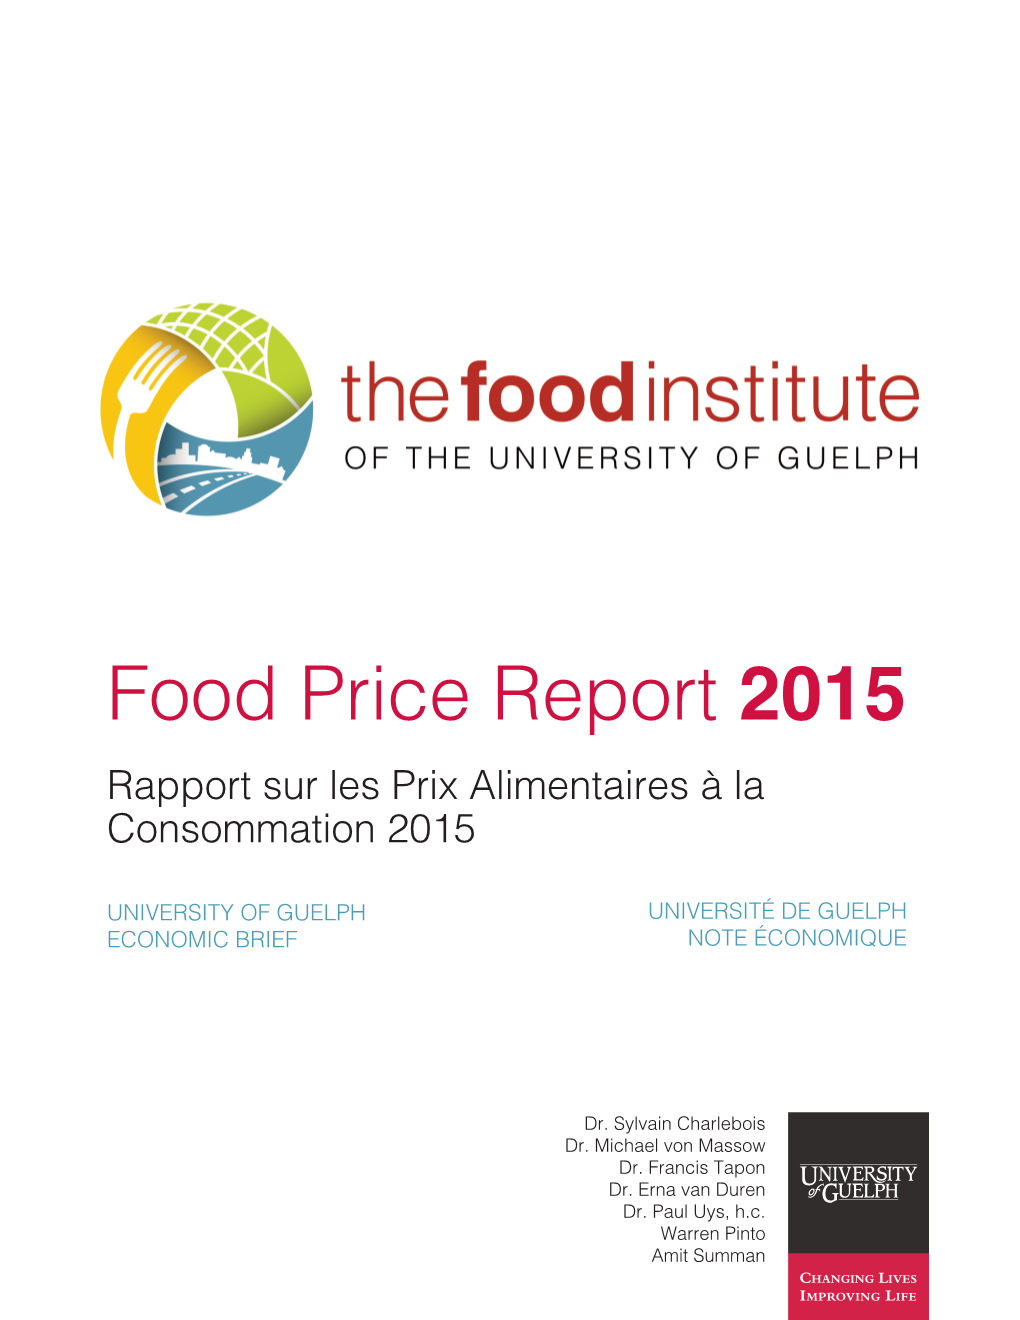 Food Price Report 2015 (FPR 2015)